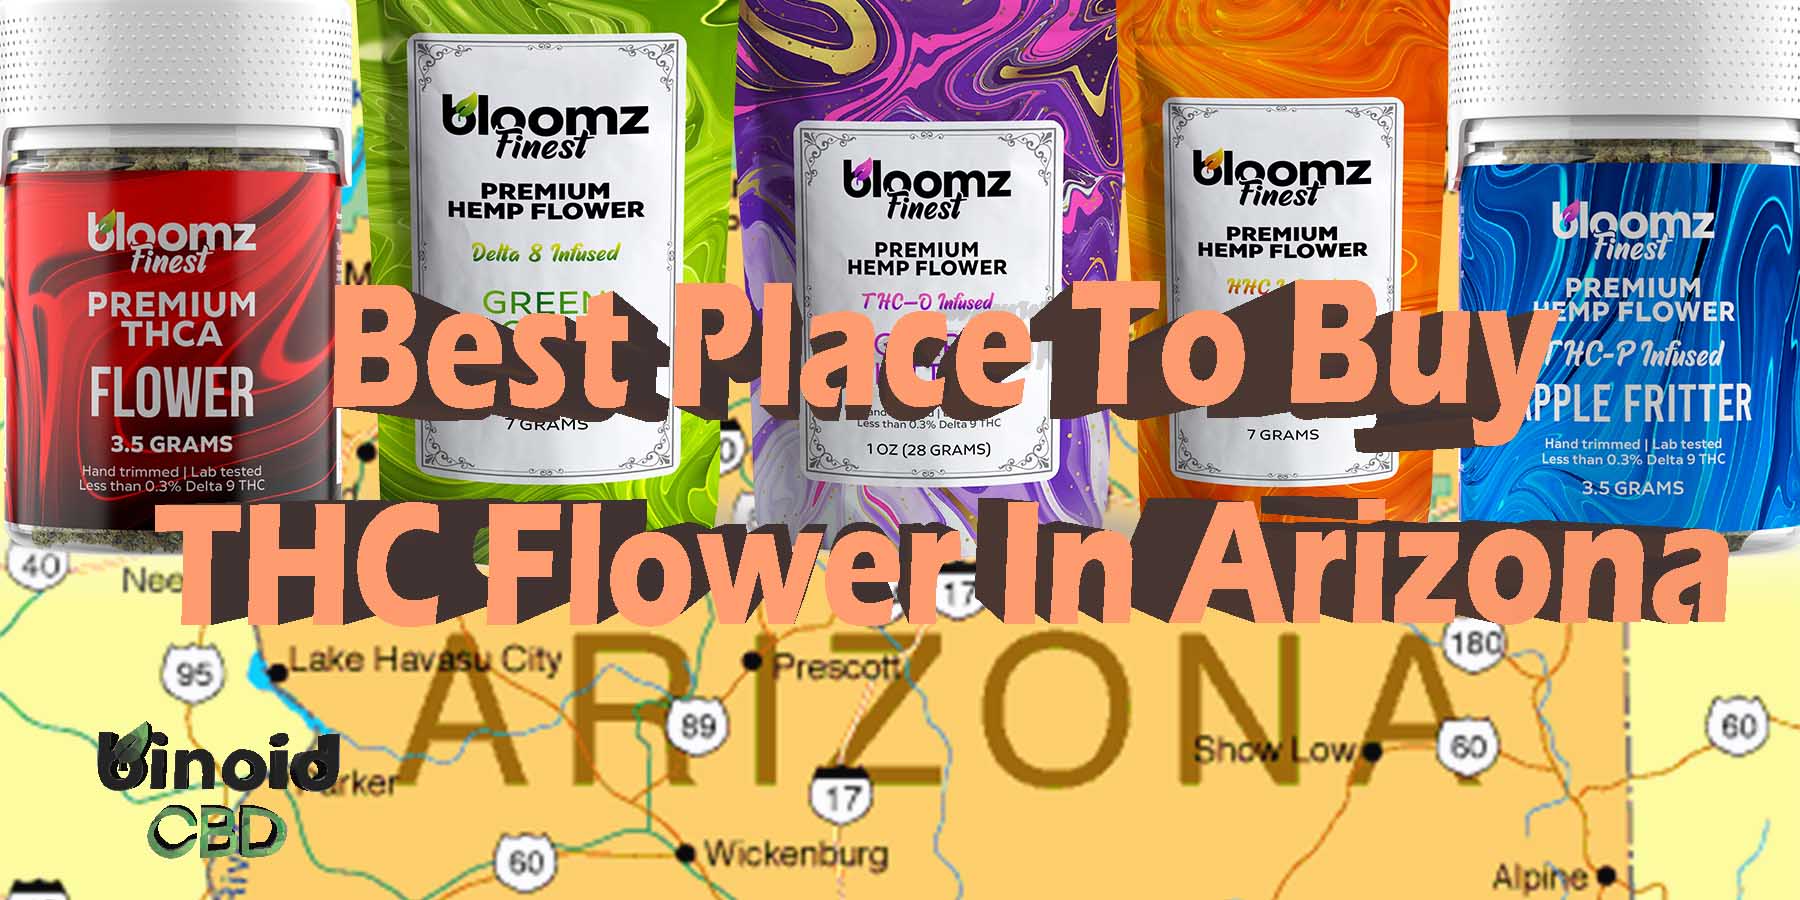 Buy THC Flower Arizona Joints PreRolls Get Online Near Me For Sale Best Brand Strongest Real Legal Store Shop Reddit